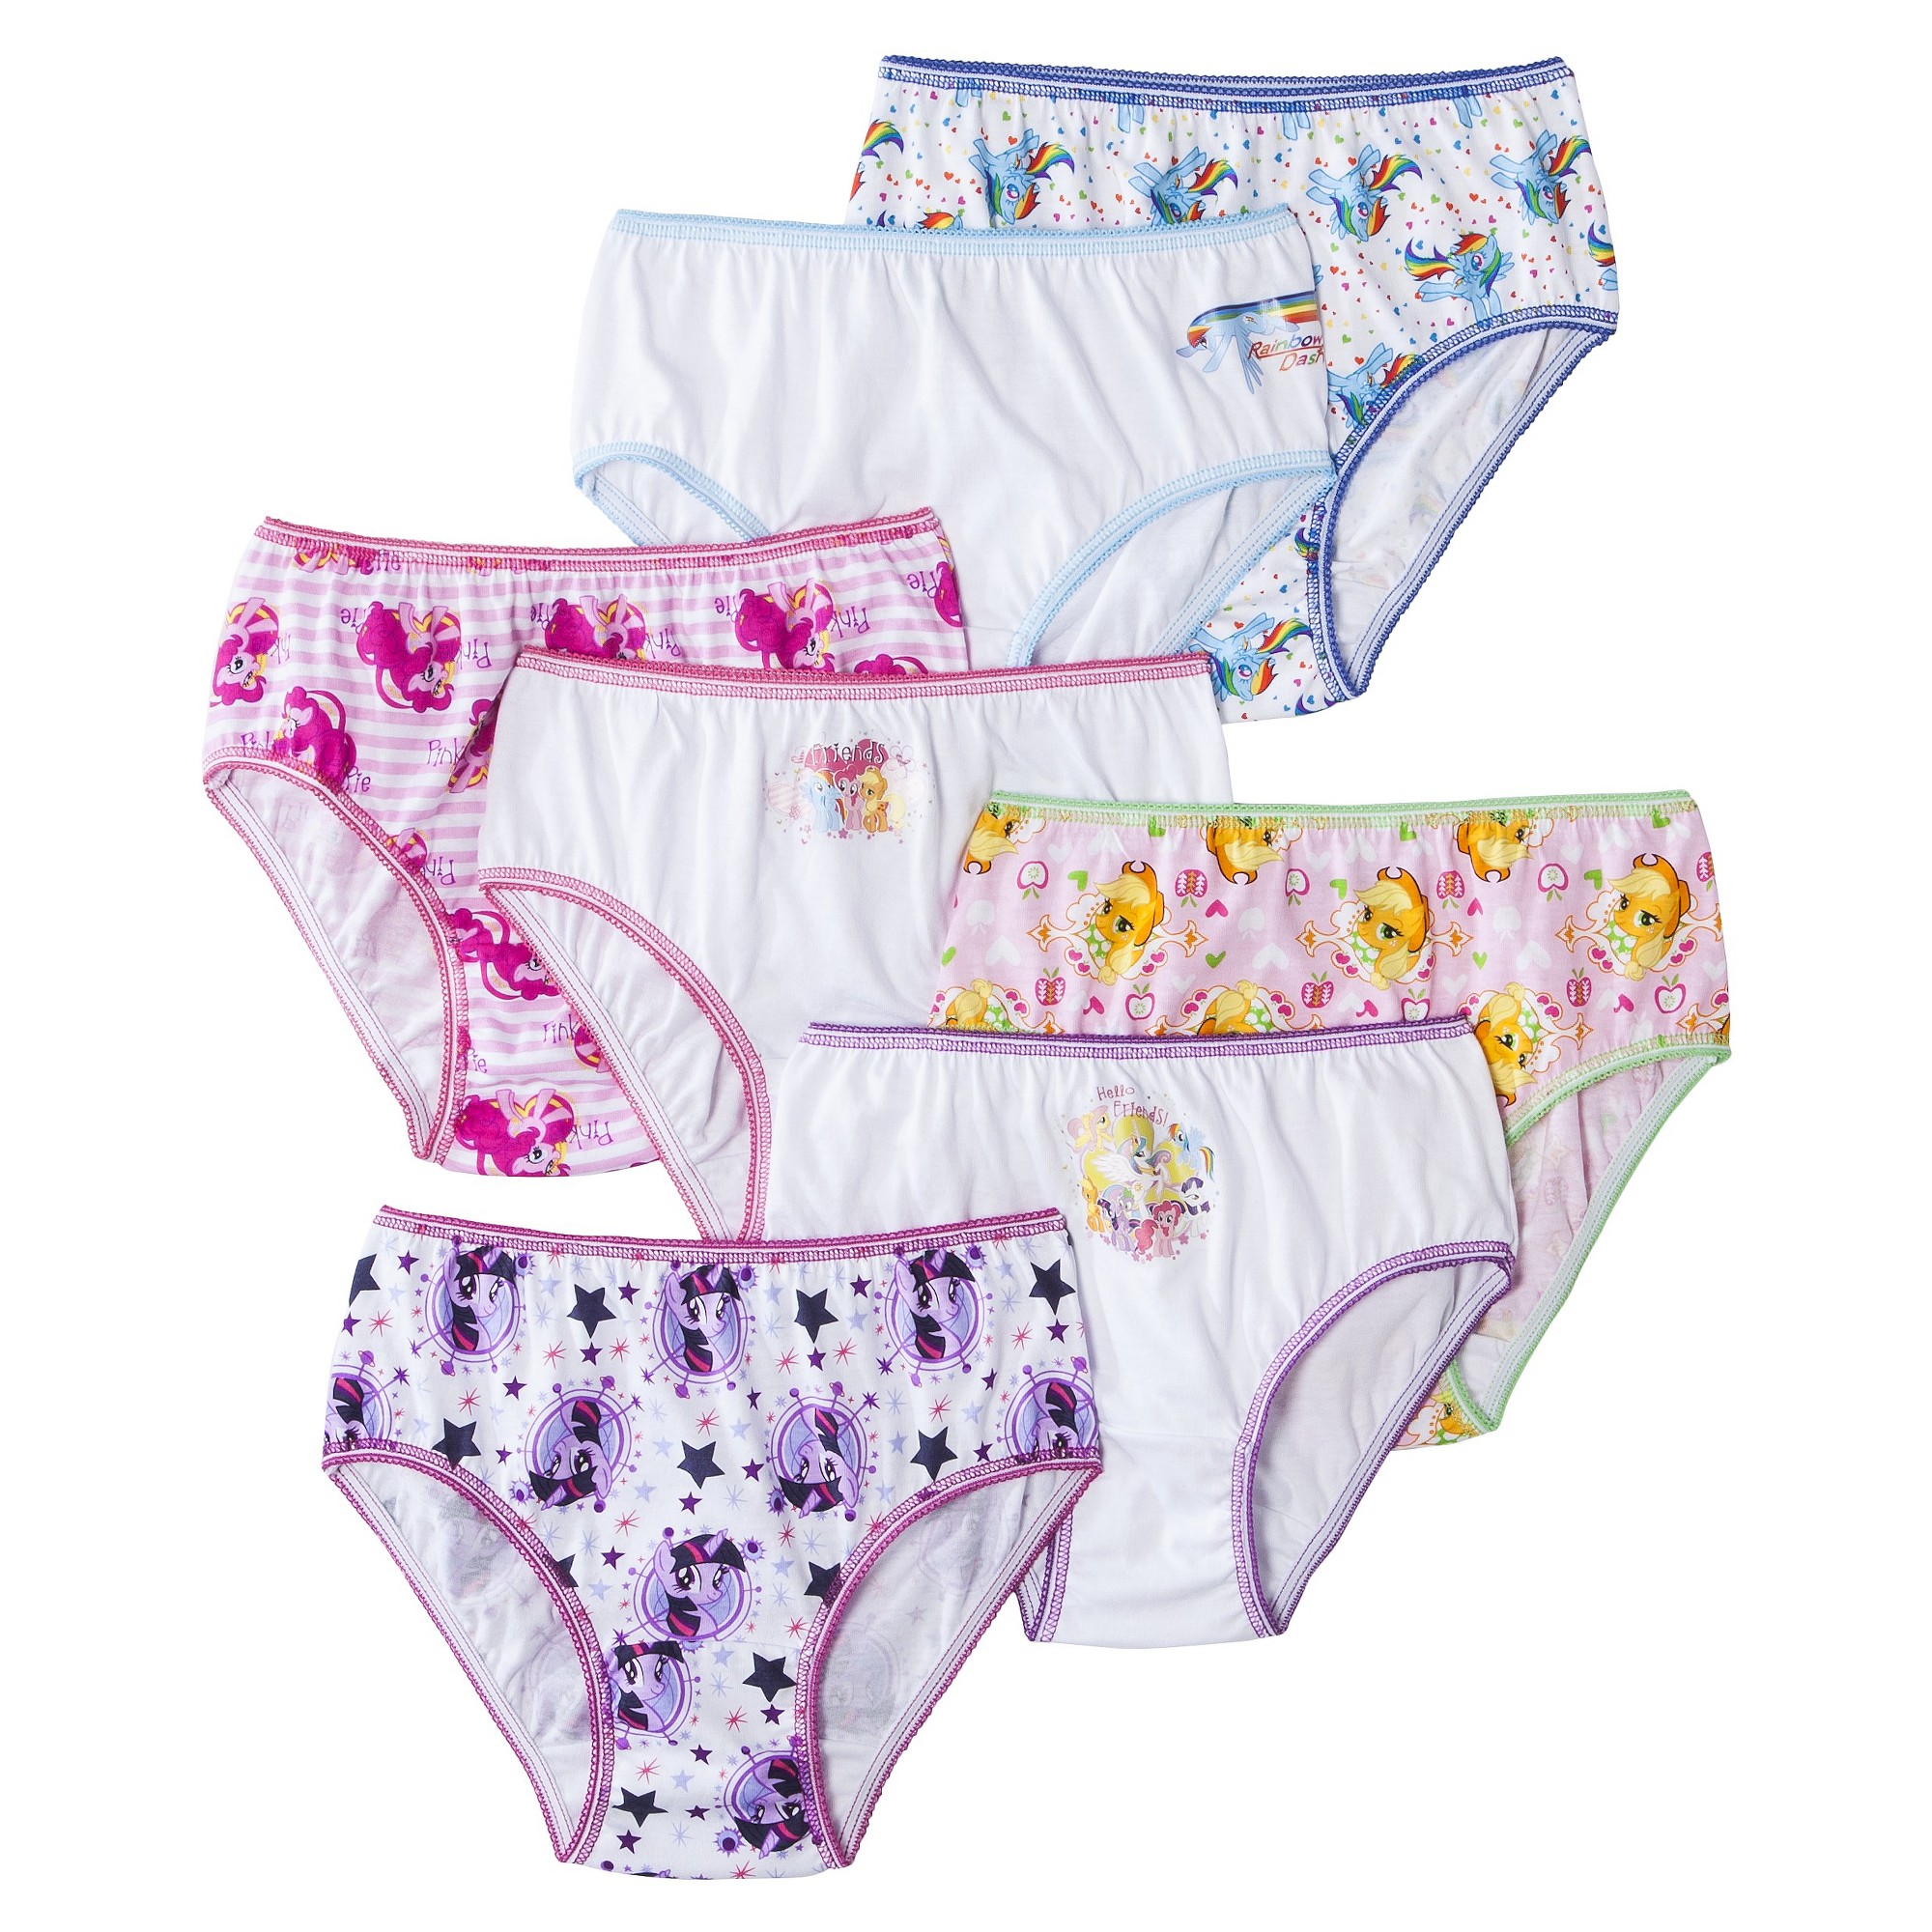 Hello Kitty Little Girls' 8-pack Panties